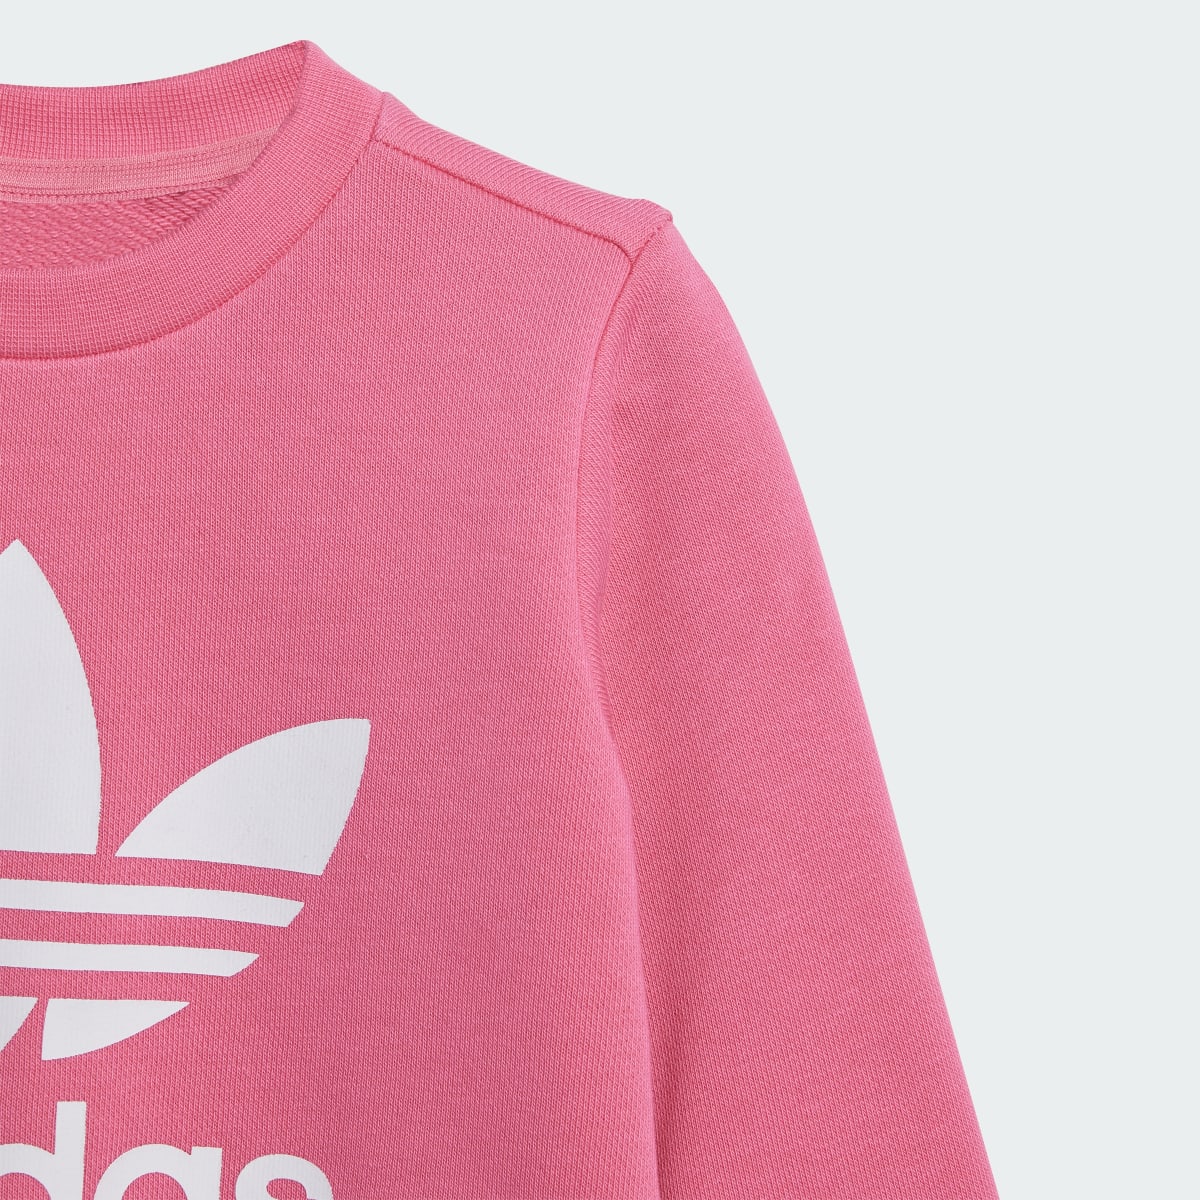 Adidas Crew Sweatshirt Set. 7